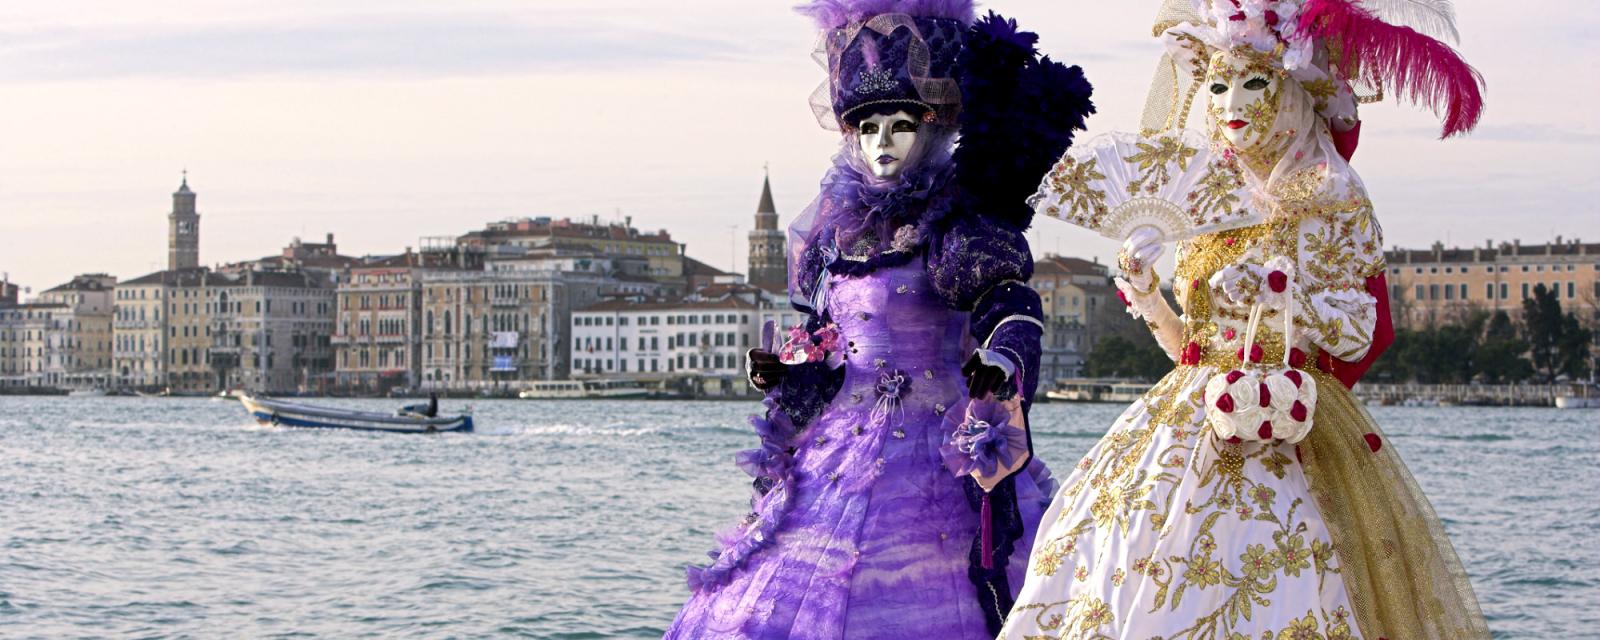 De leukste highlights in Venetië - CityZapper Favorites 